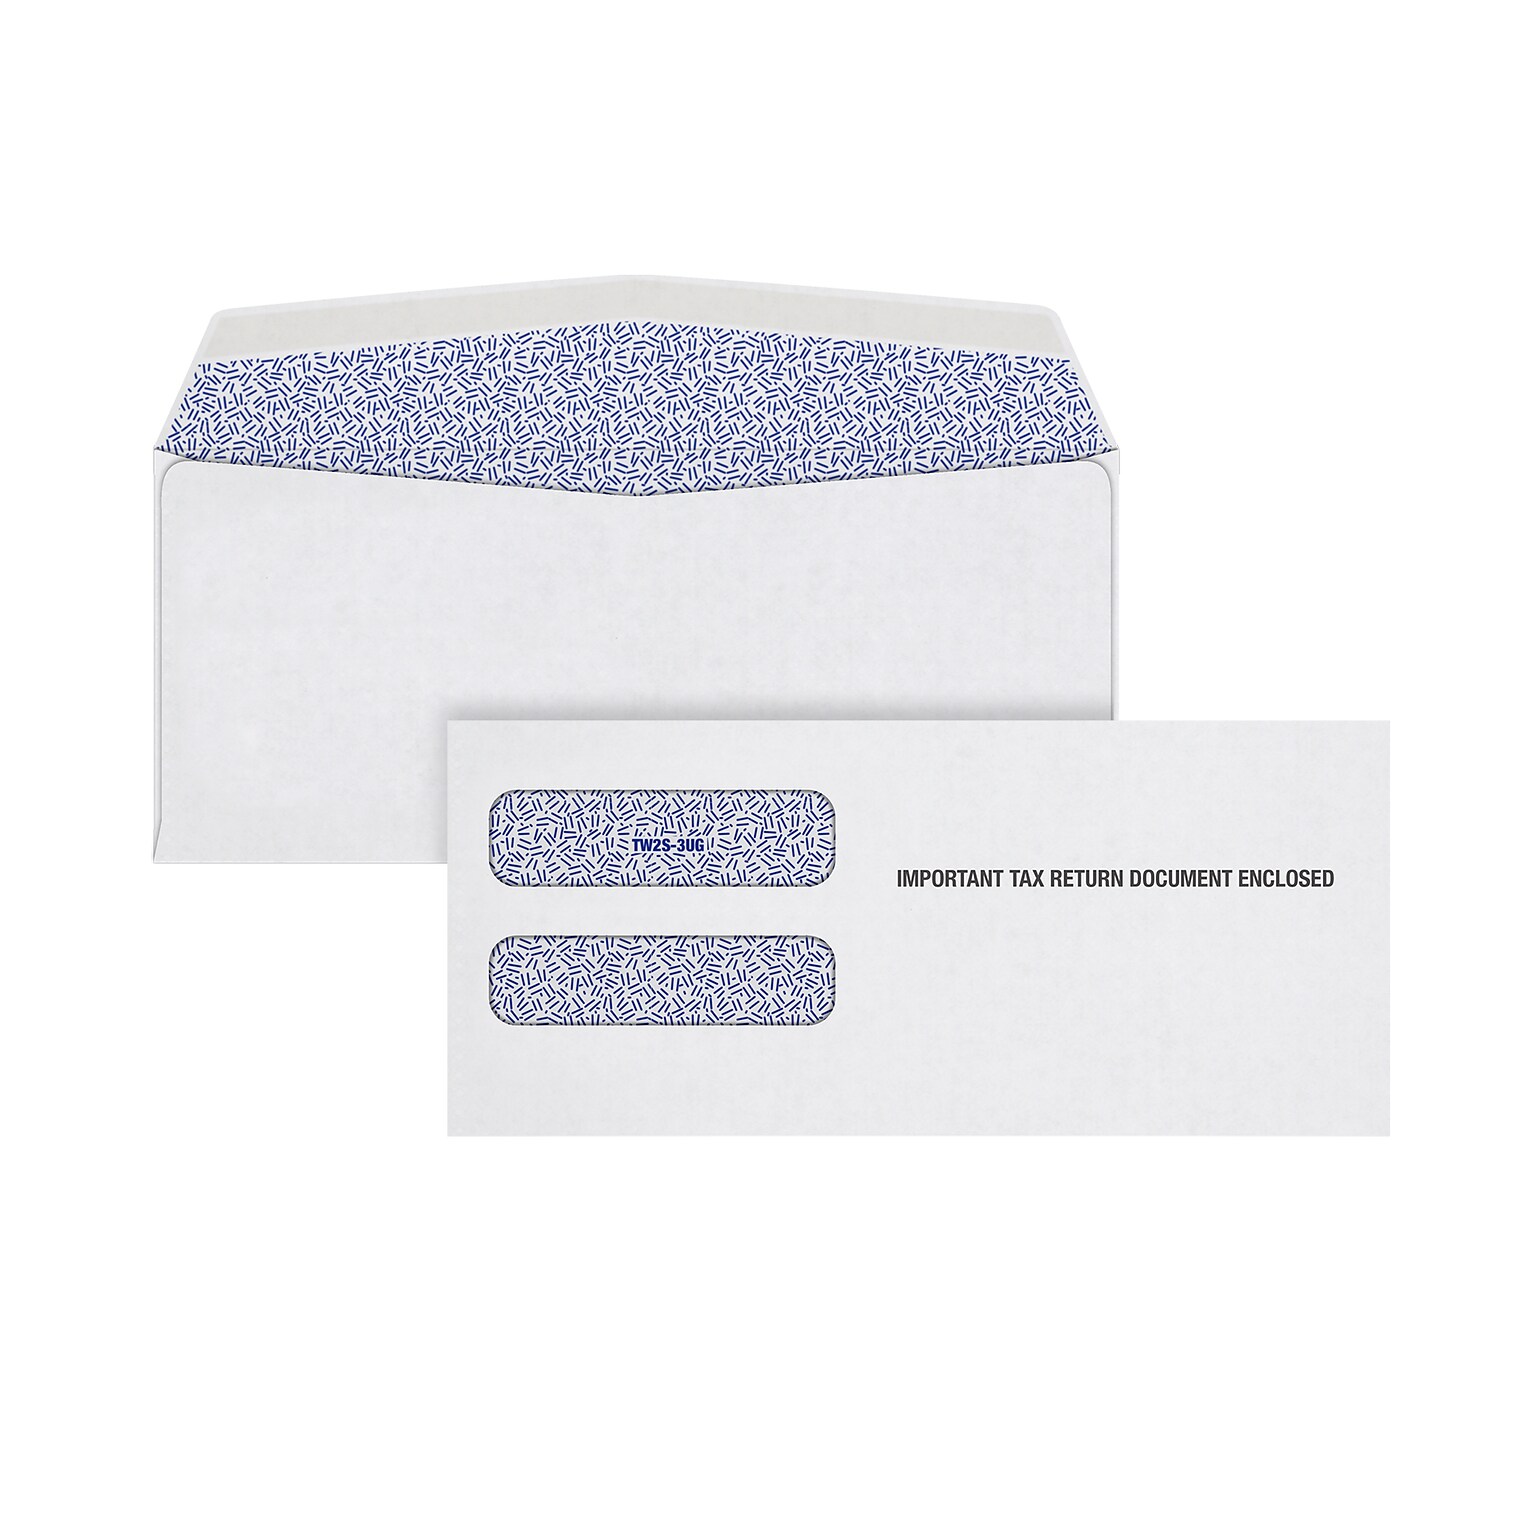 TOPS undated Gummed W-2 Double Window Envelope, 3 7/8 x 8 1/4, White, 100/Pack (DW3ALT100)